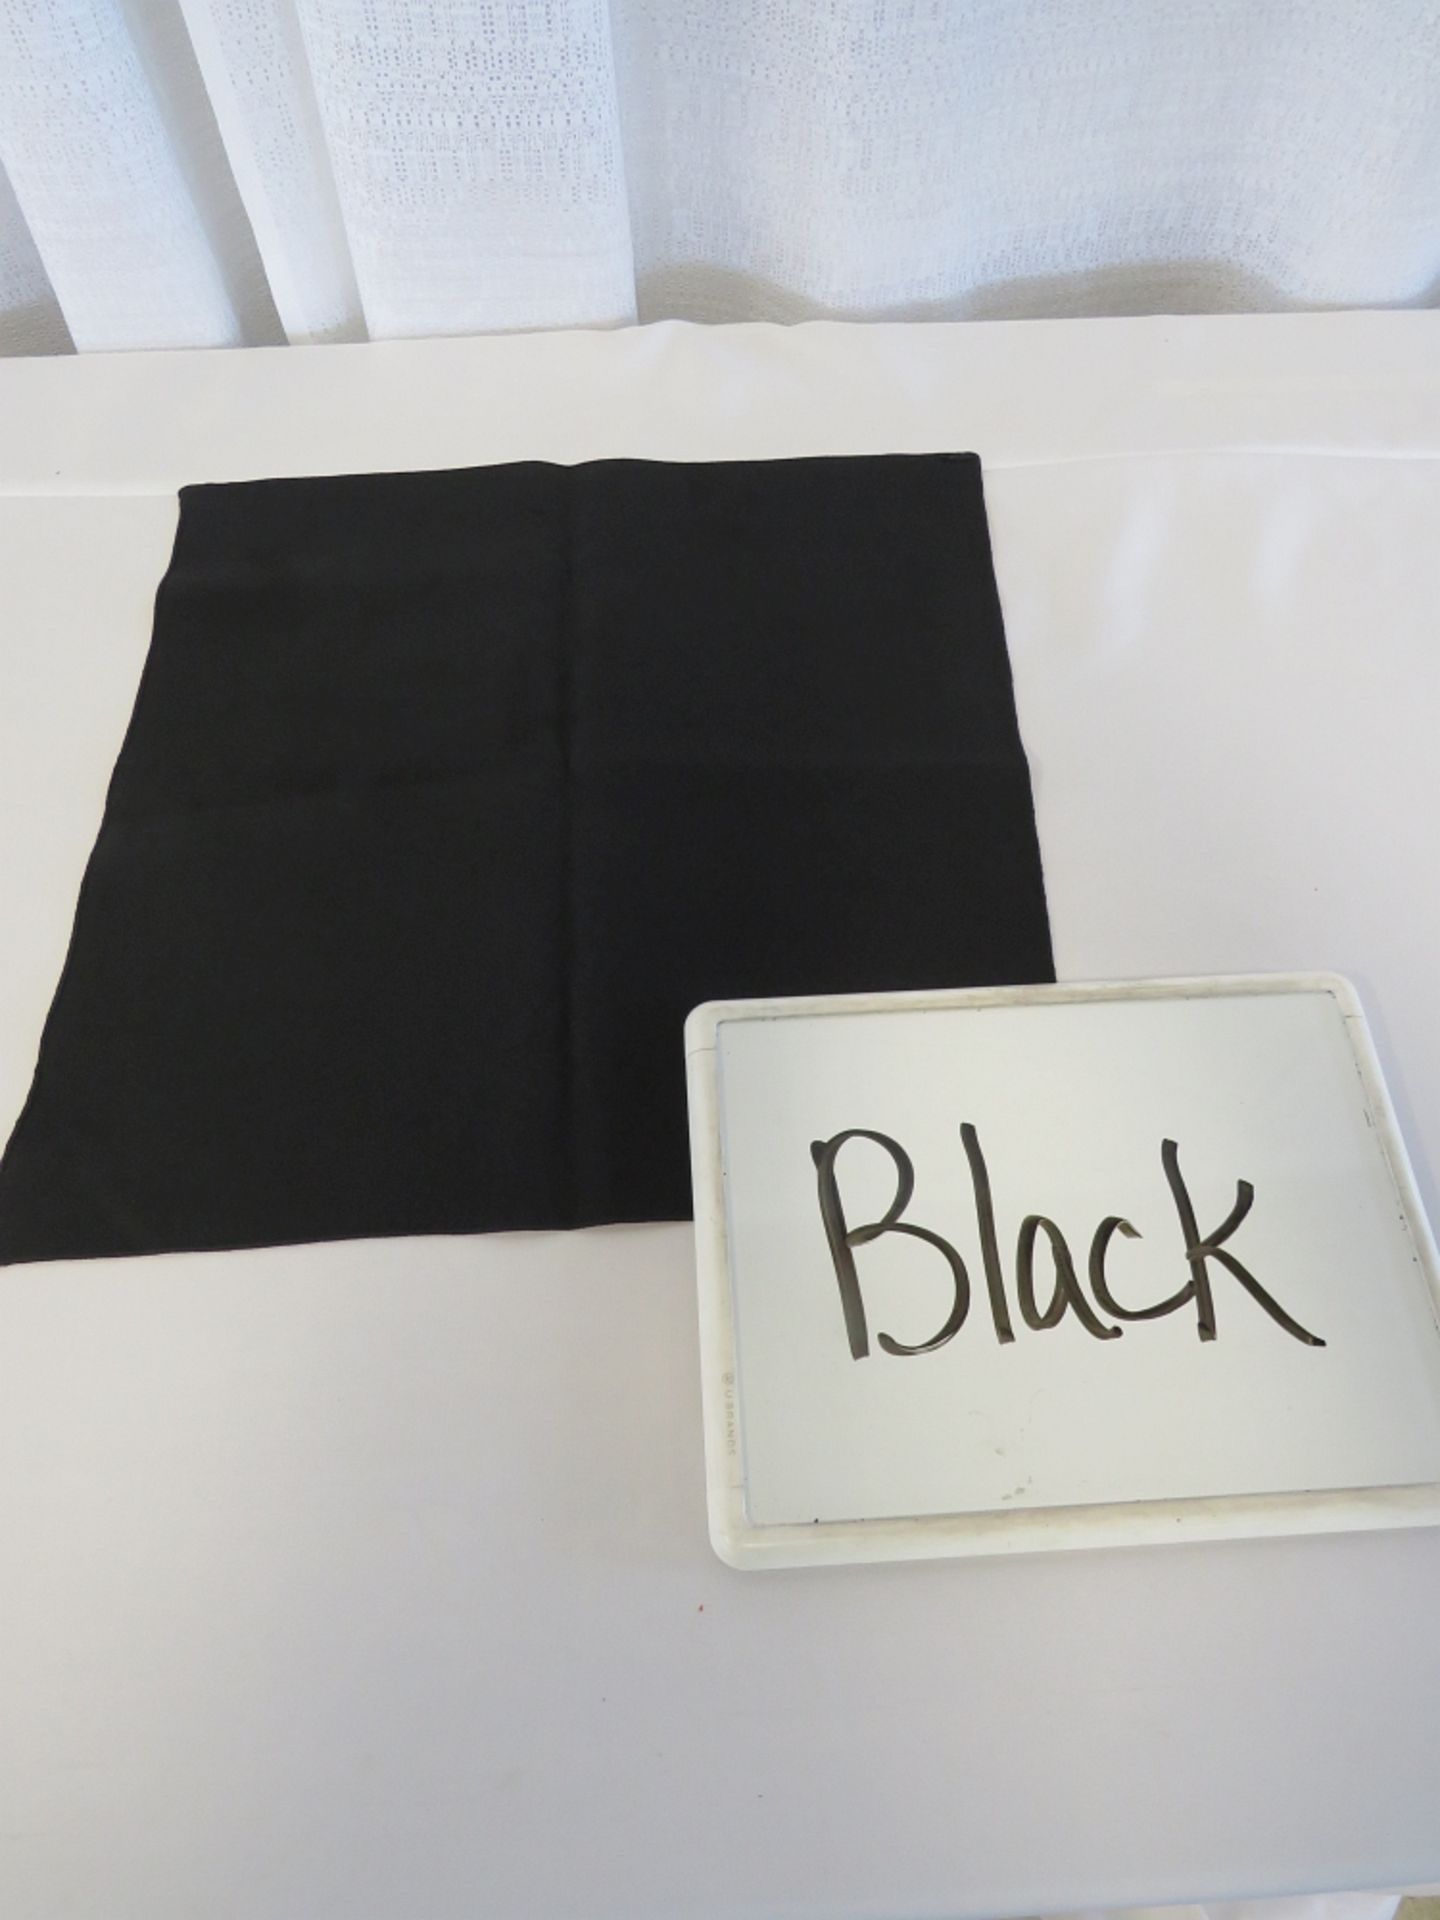 52" x 52" Tablecloth, Black